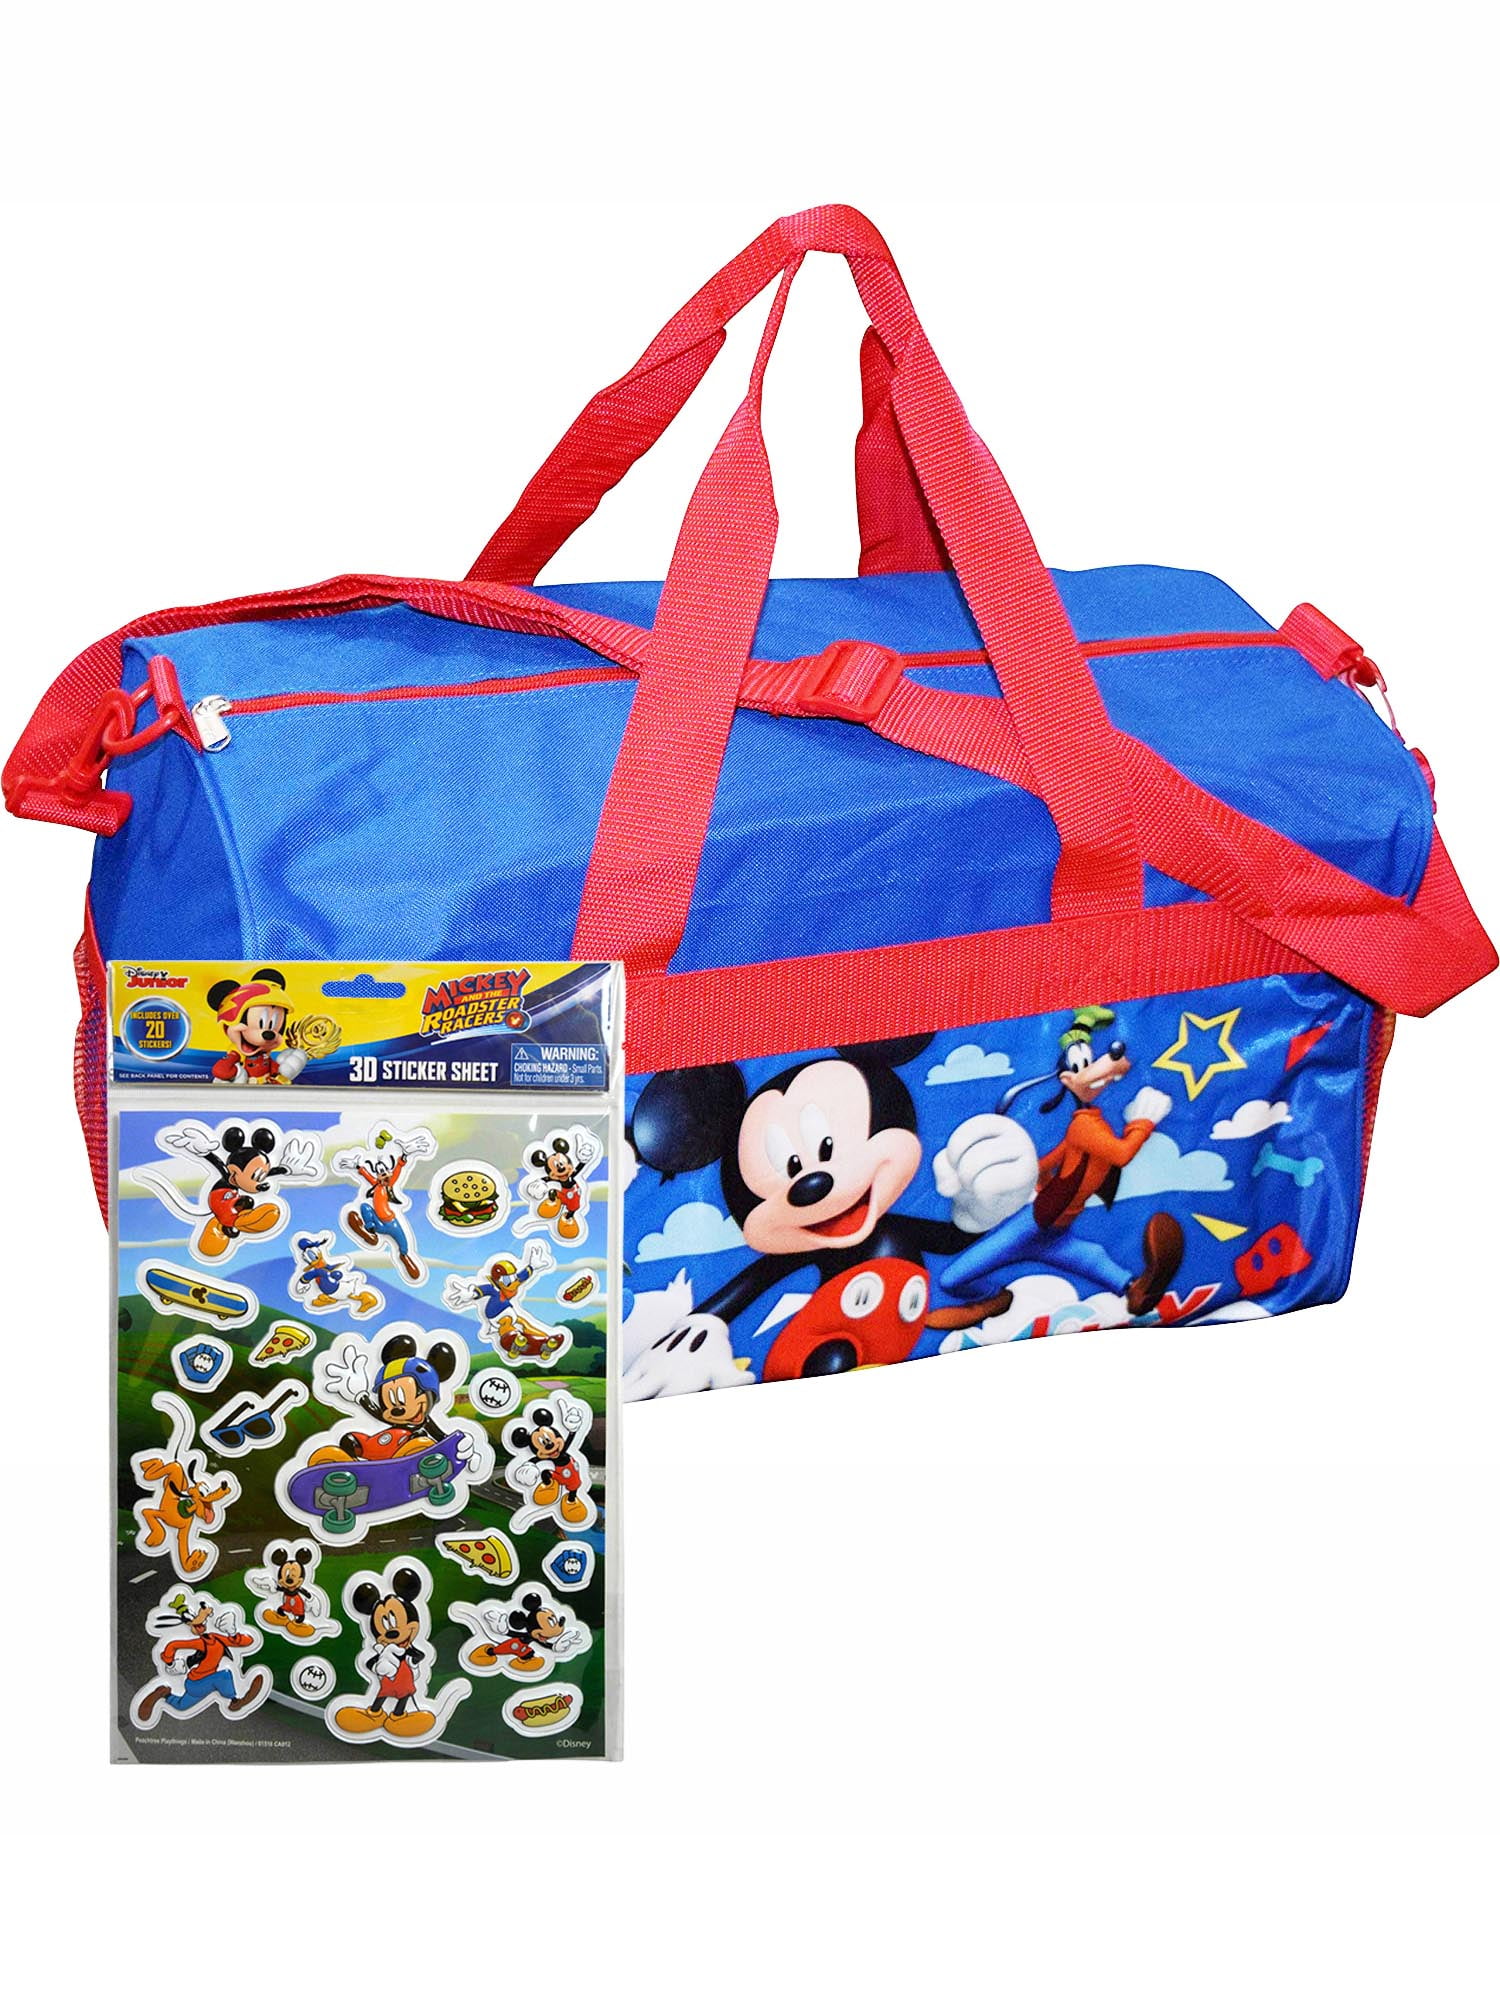 New Disney Minnie Mouse and Friends Kids Girls Travel Duffel Diaper Gym Bag 17" 